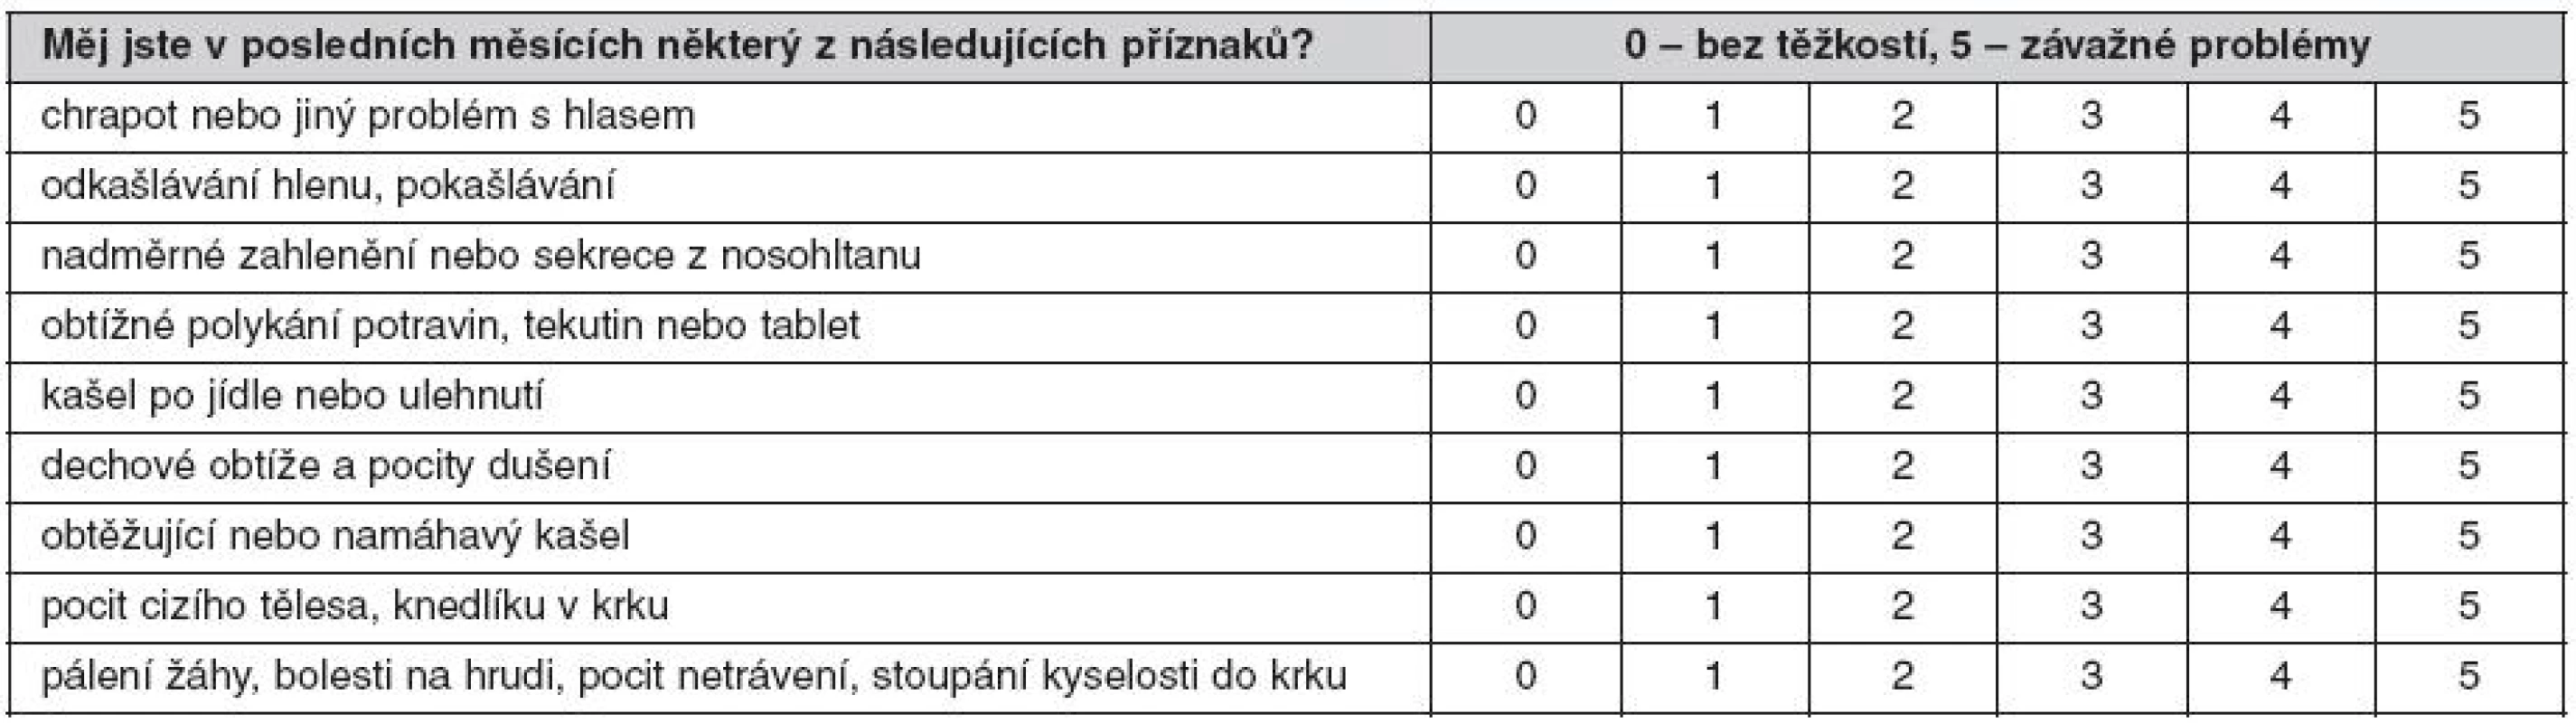 Index symptomů refluxu (reflux symptom index) podle Belafskyho (28, 29)